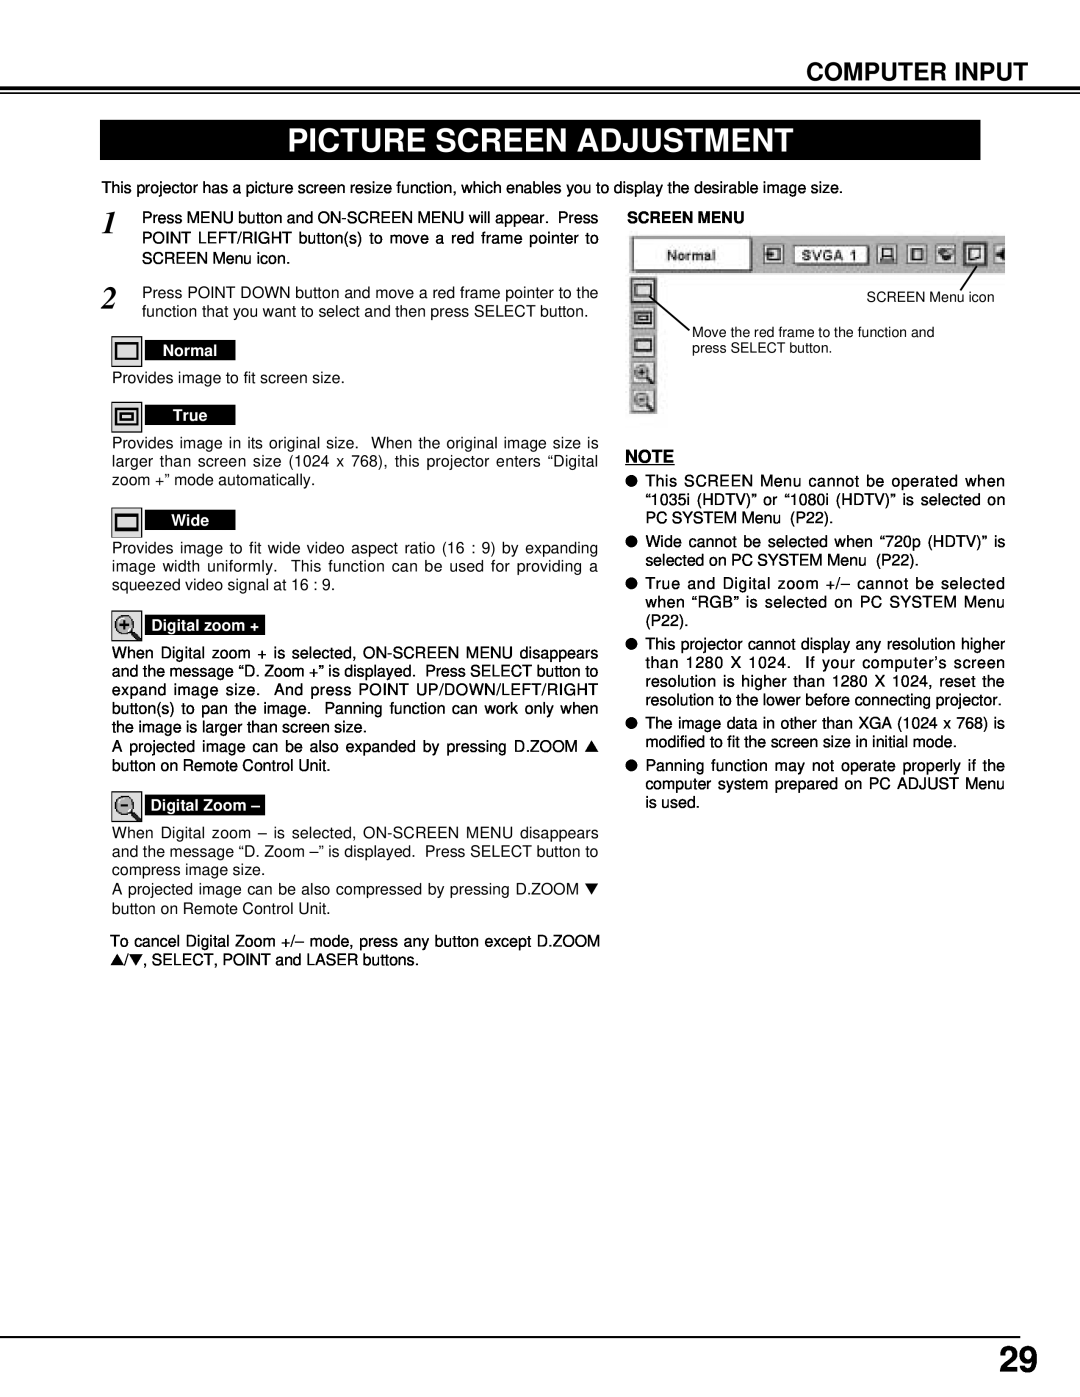 Eiki LC-XNB3W owner manual Picture Screen Adjustment, Computer Input, Screen Menu 